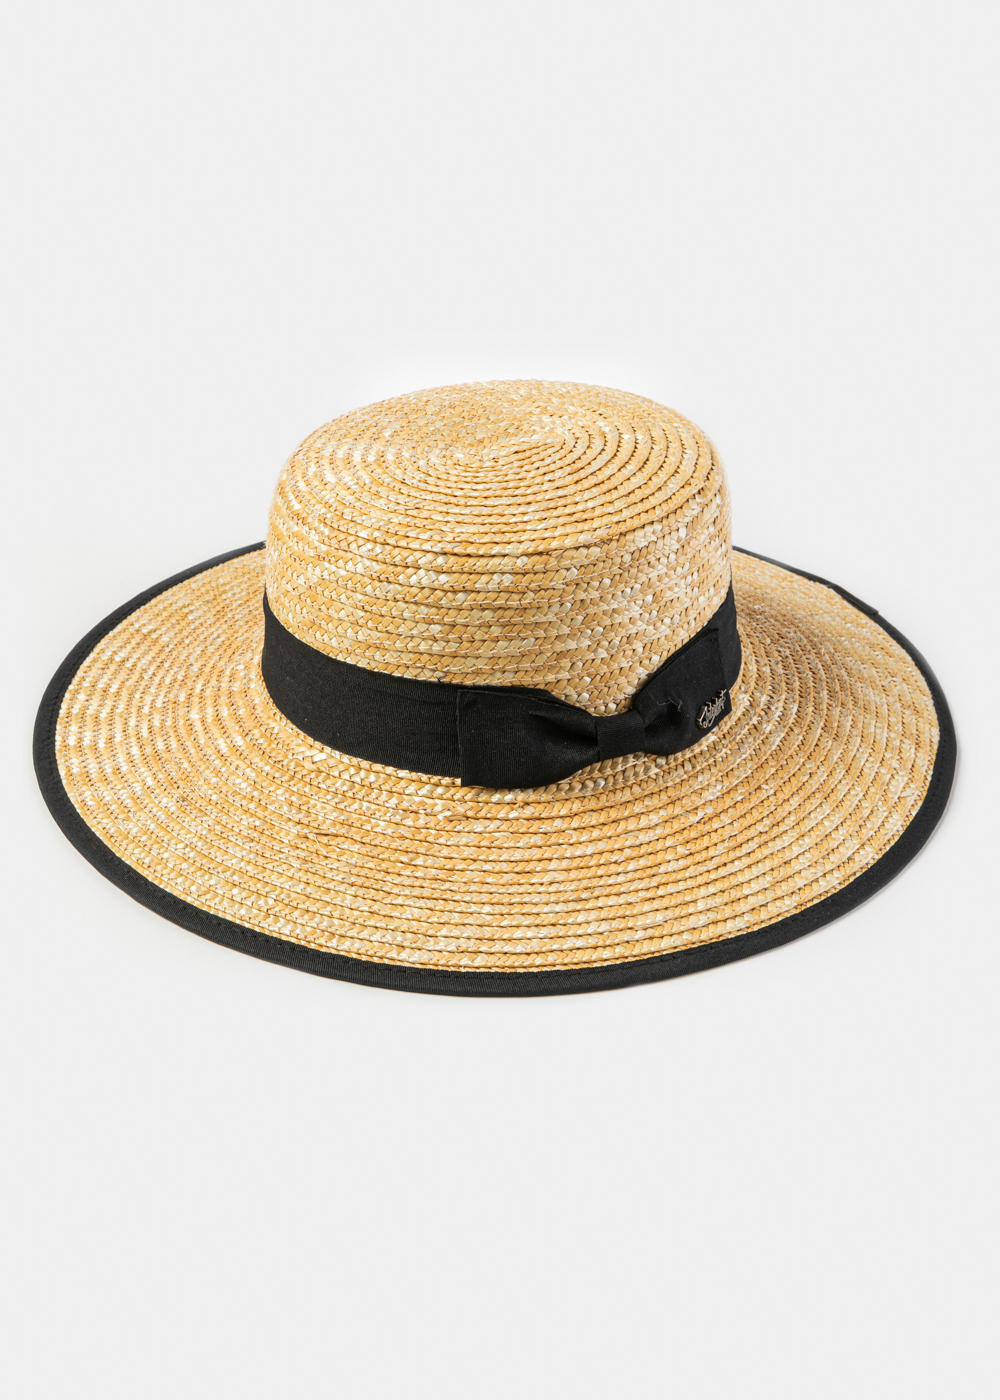 Natural Straw Hat w/ Black Details